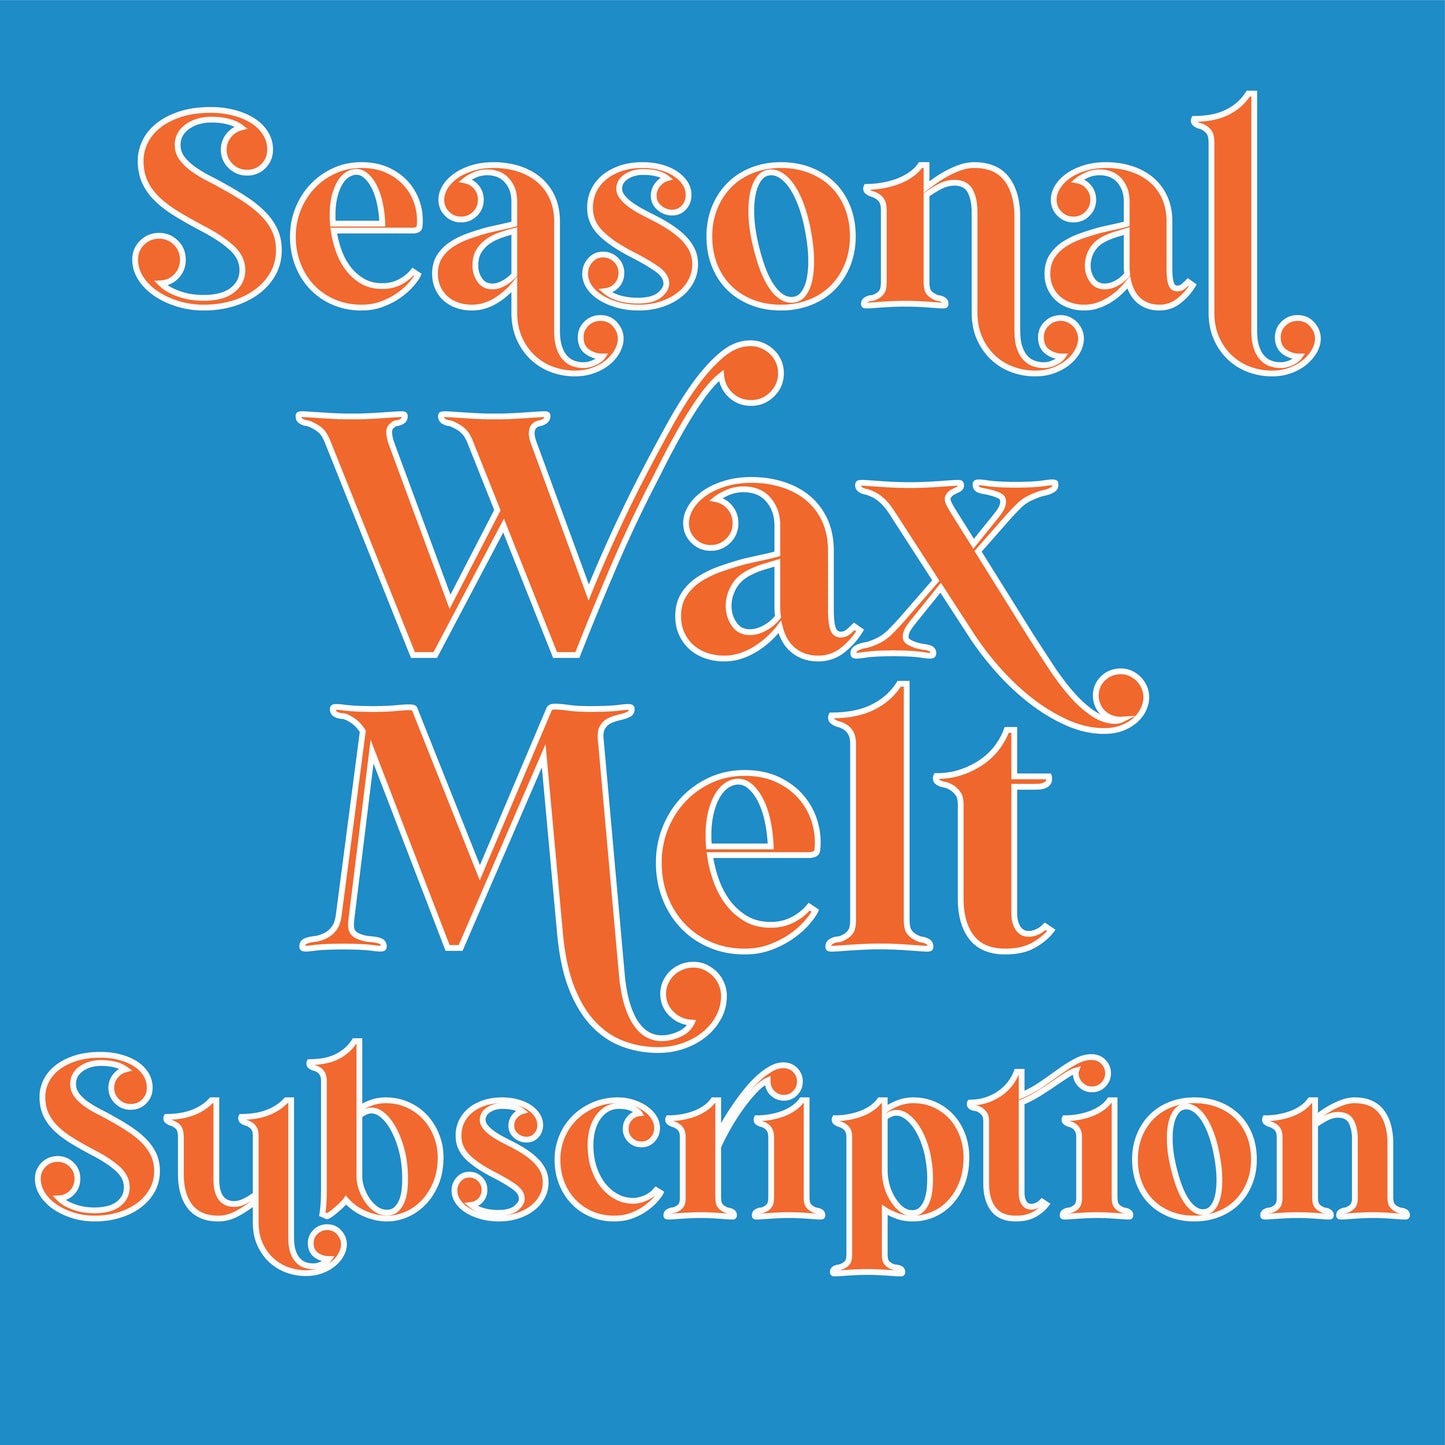 Wax Melt Seasonal Subscription Box